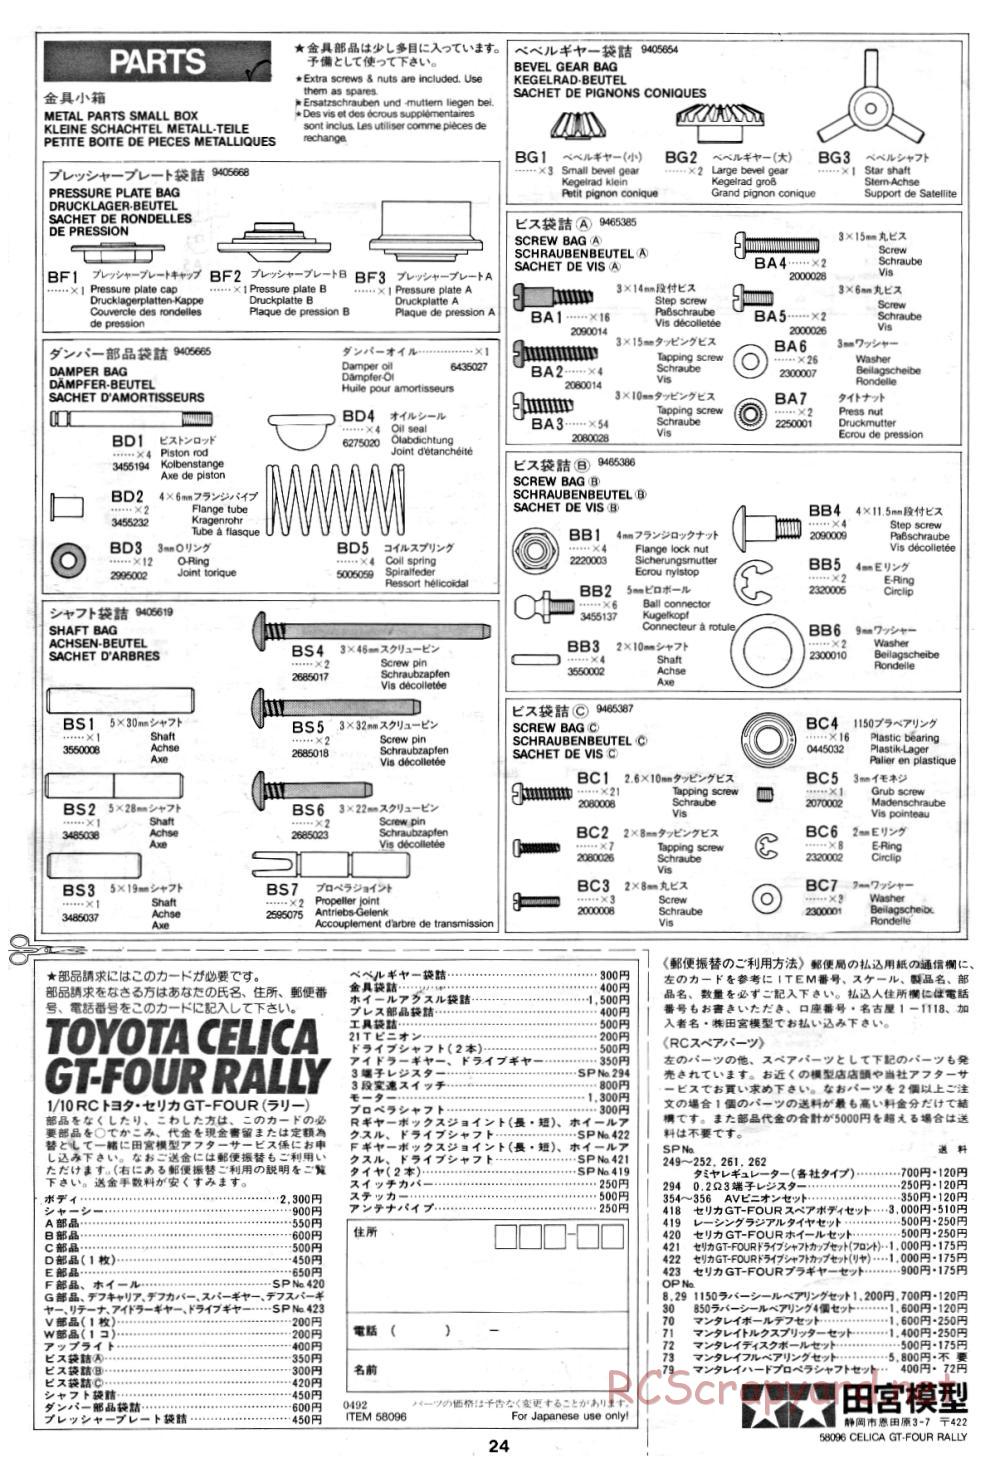 Tamiya - Toyota Celica GT-Four Rally - 58096 - Manual - Page 24